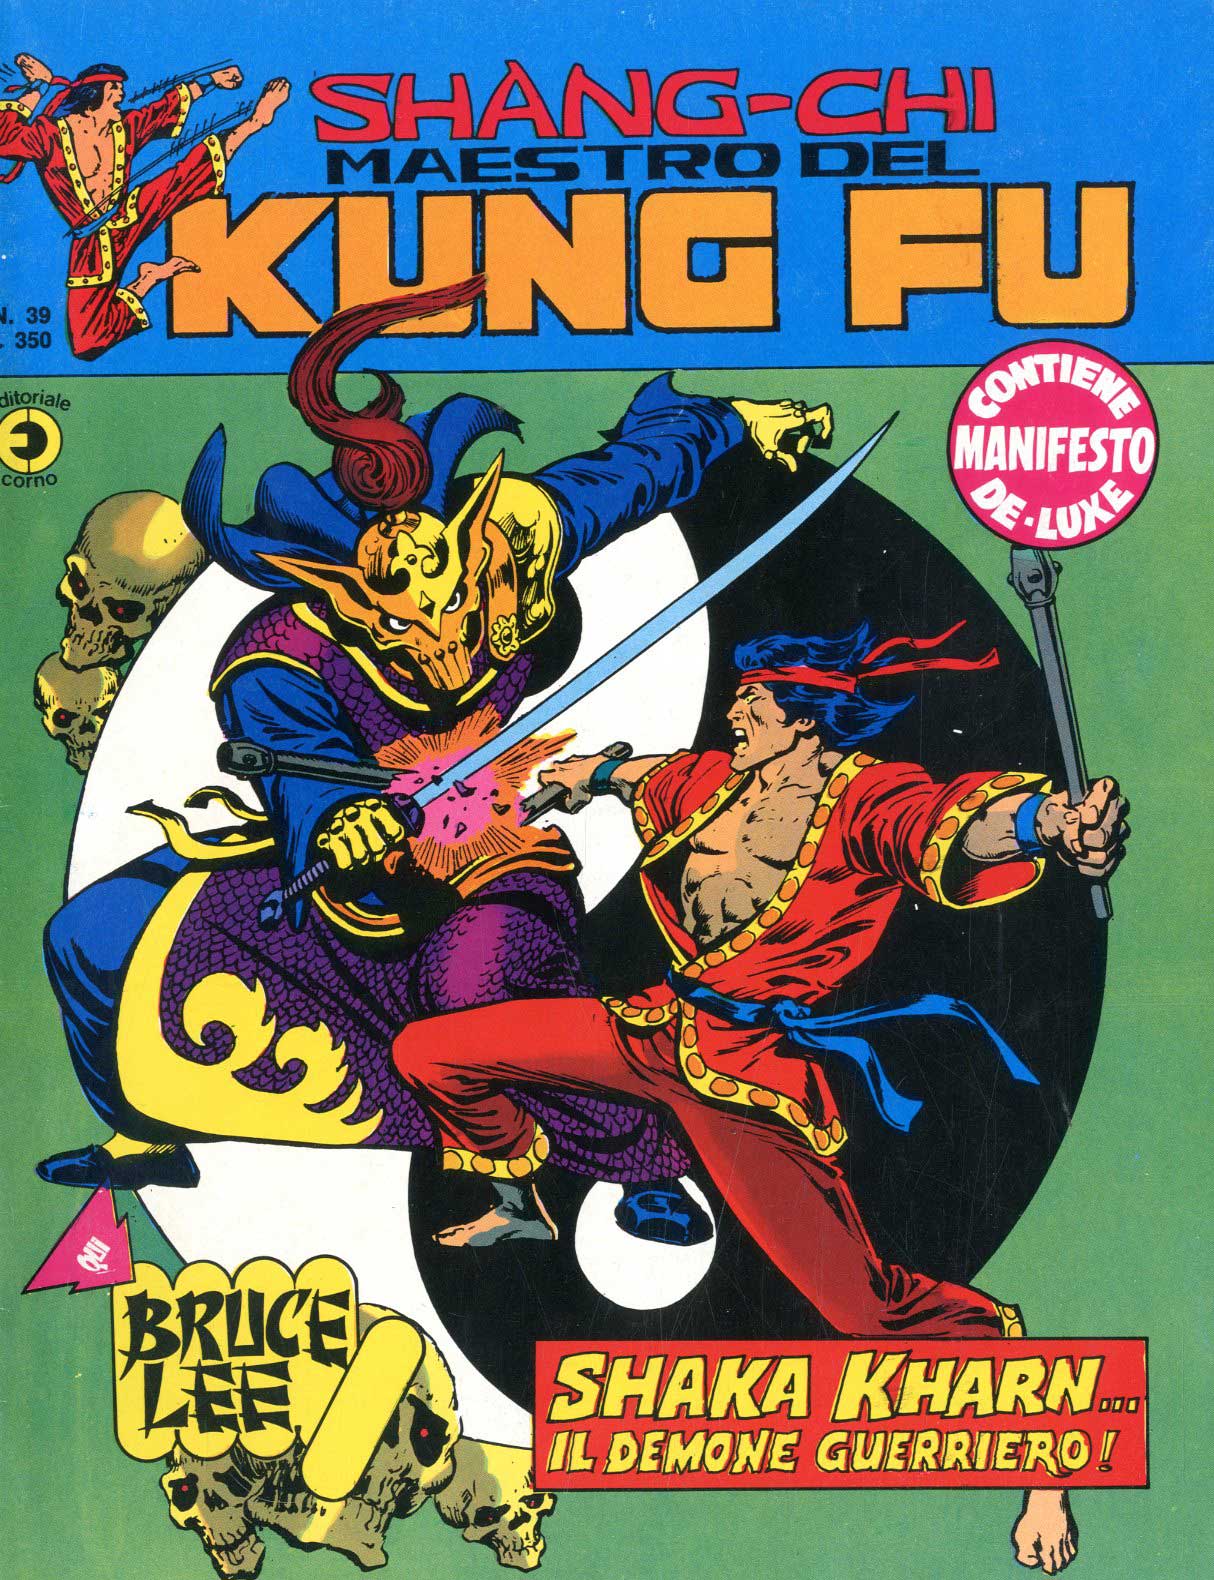 Shang-Chi Maestro del Kung Fu 39